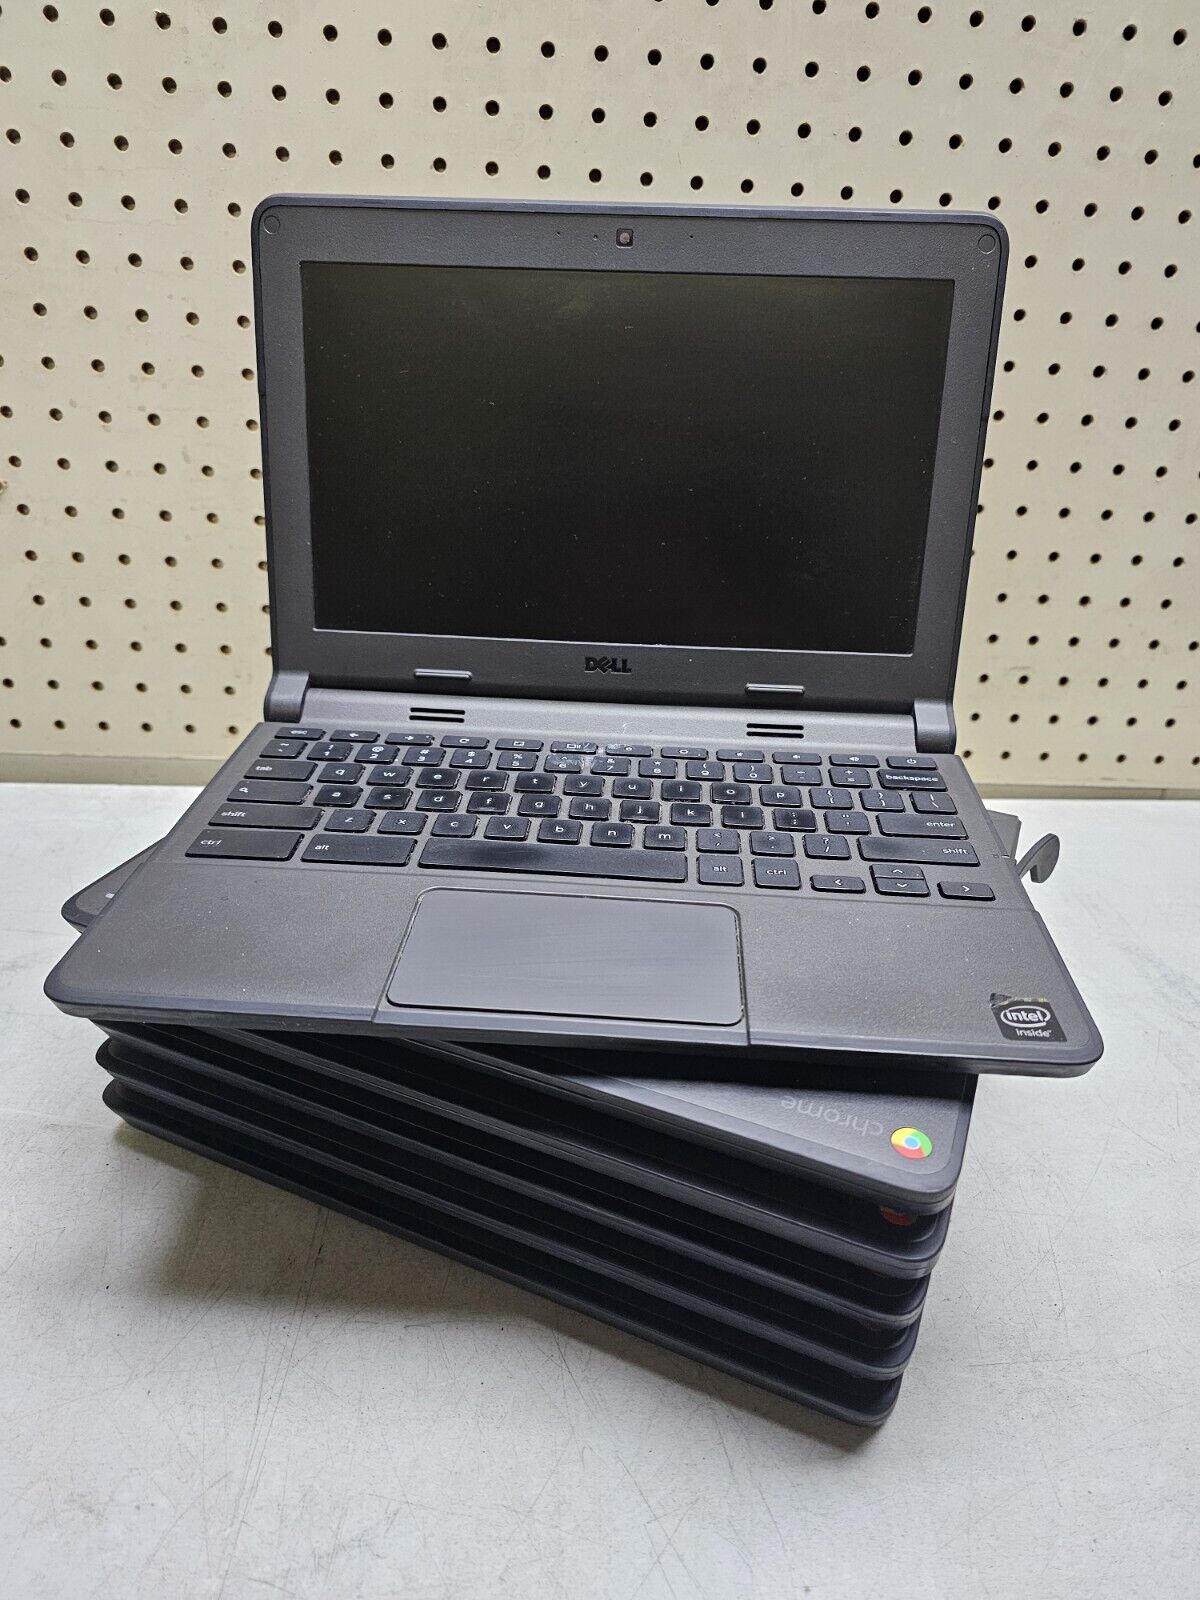 Lot of 6 Dell Chromebook 11 Laptop - Intel Celeron N2840 - 4GB RAM - Read Desc.